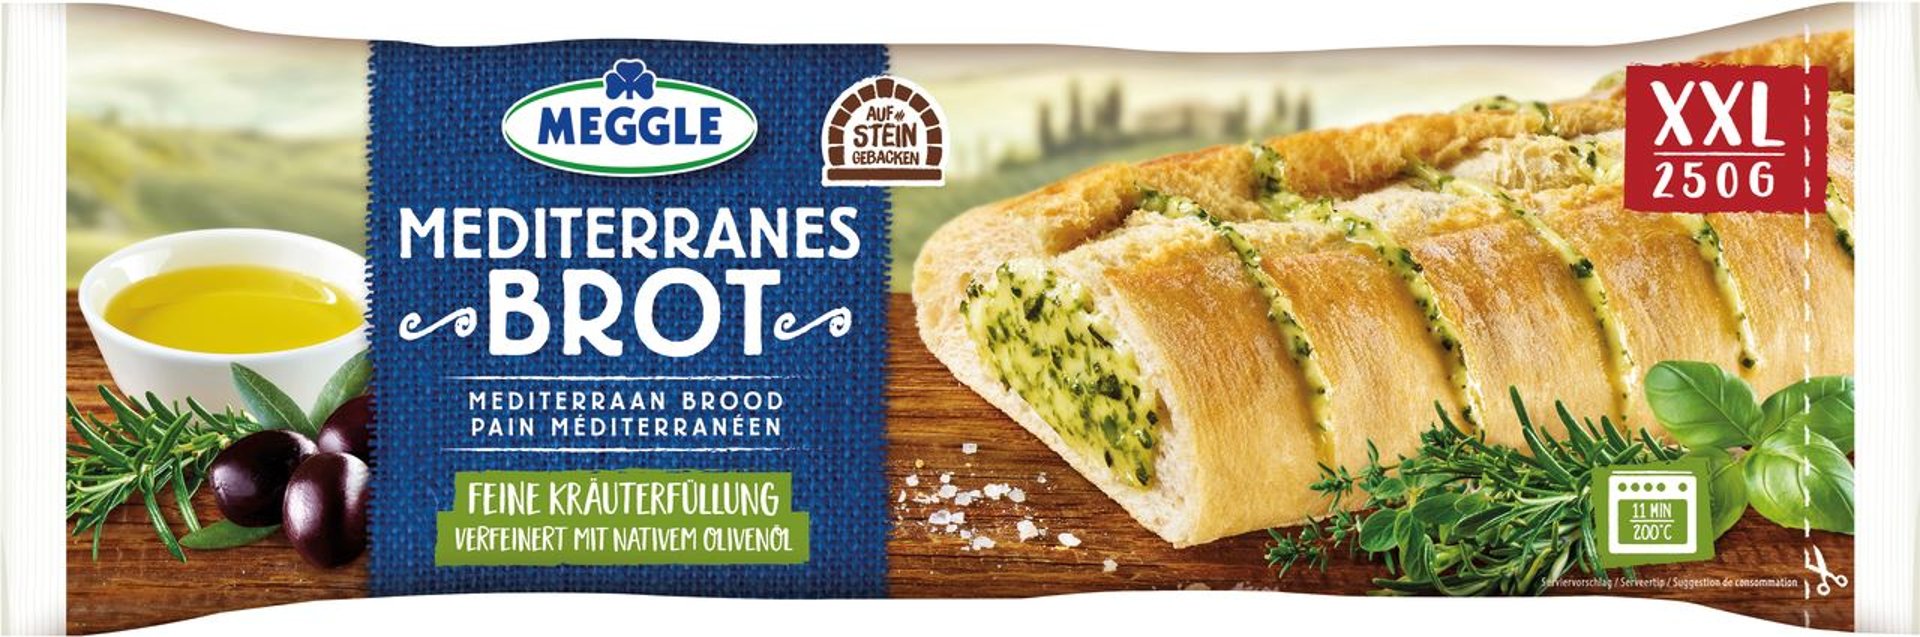 Meggle - Mediterranes Brot Feine Kräuterfüllung gekühlt - 250 g Packung